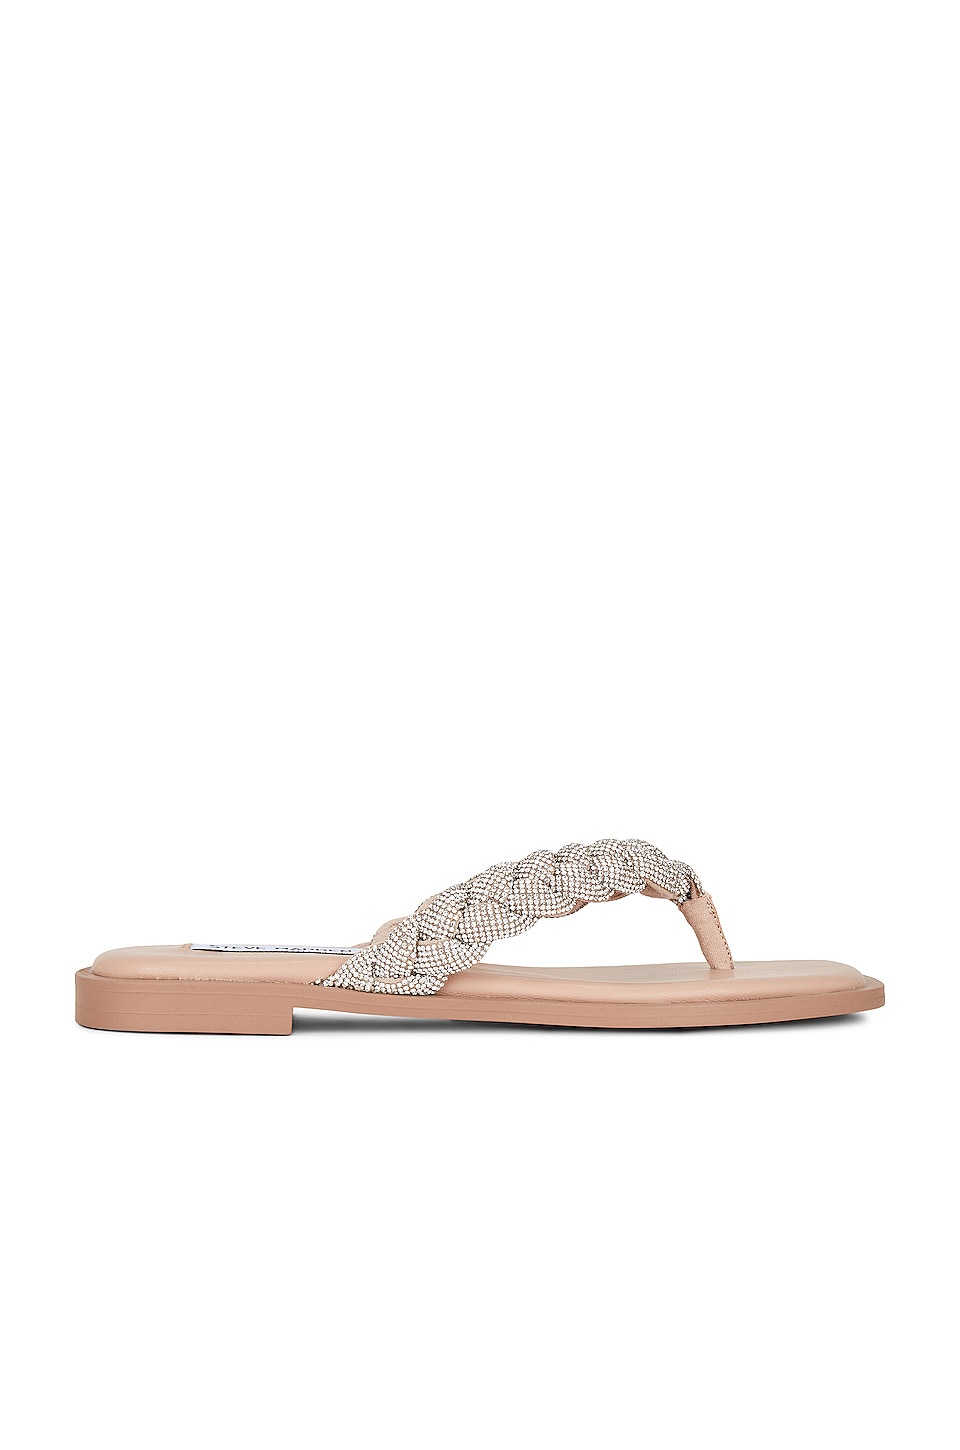 ZiGi Ny Bling Flip Flops Rhinestone Sandals White Diamond Heel Sz 8.5 Beach  - Đức An Phát